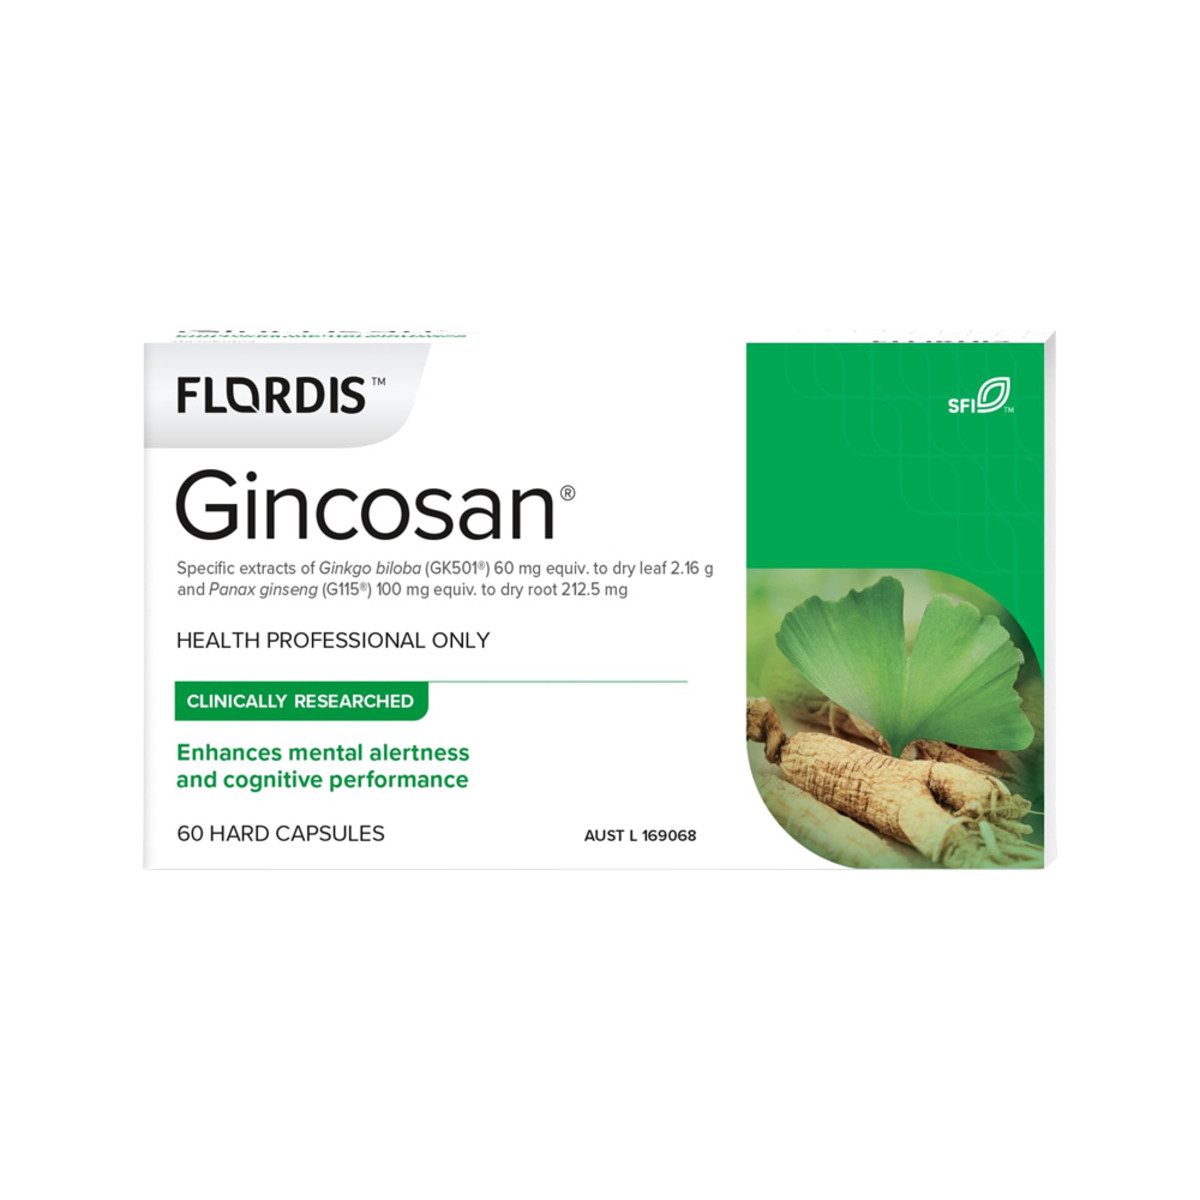 FLORDIS - Gincosan